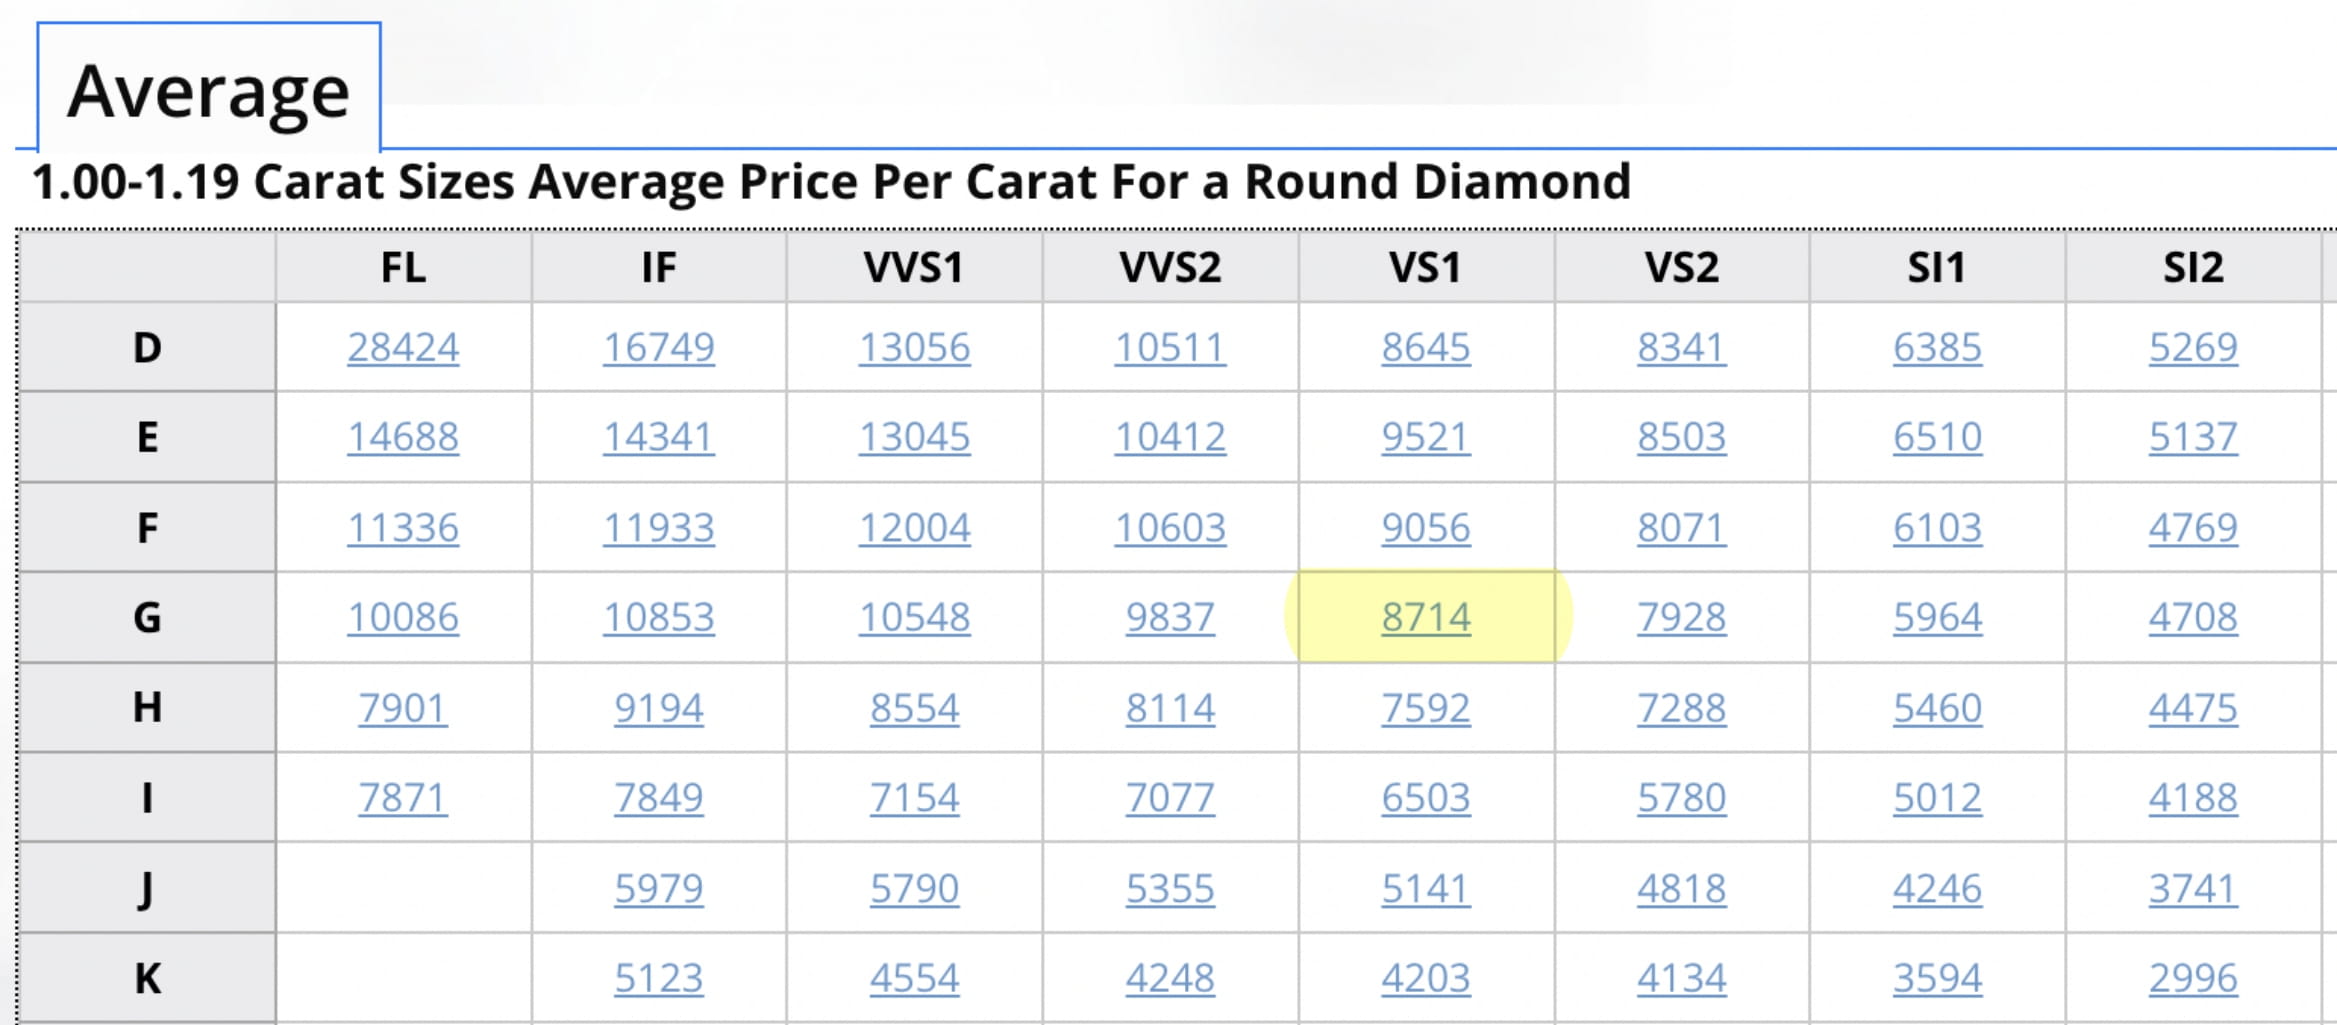 Average Price Per Carat For a Round Diamond - November 2022